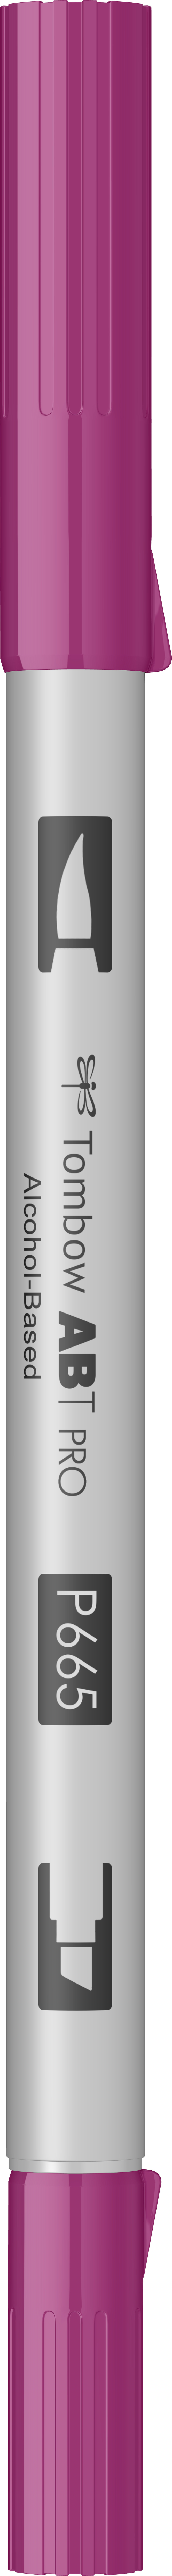 ABT Pro Dual Brush Pen-4848